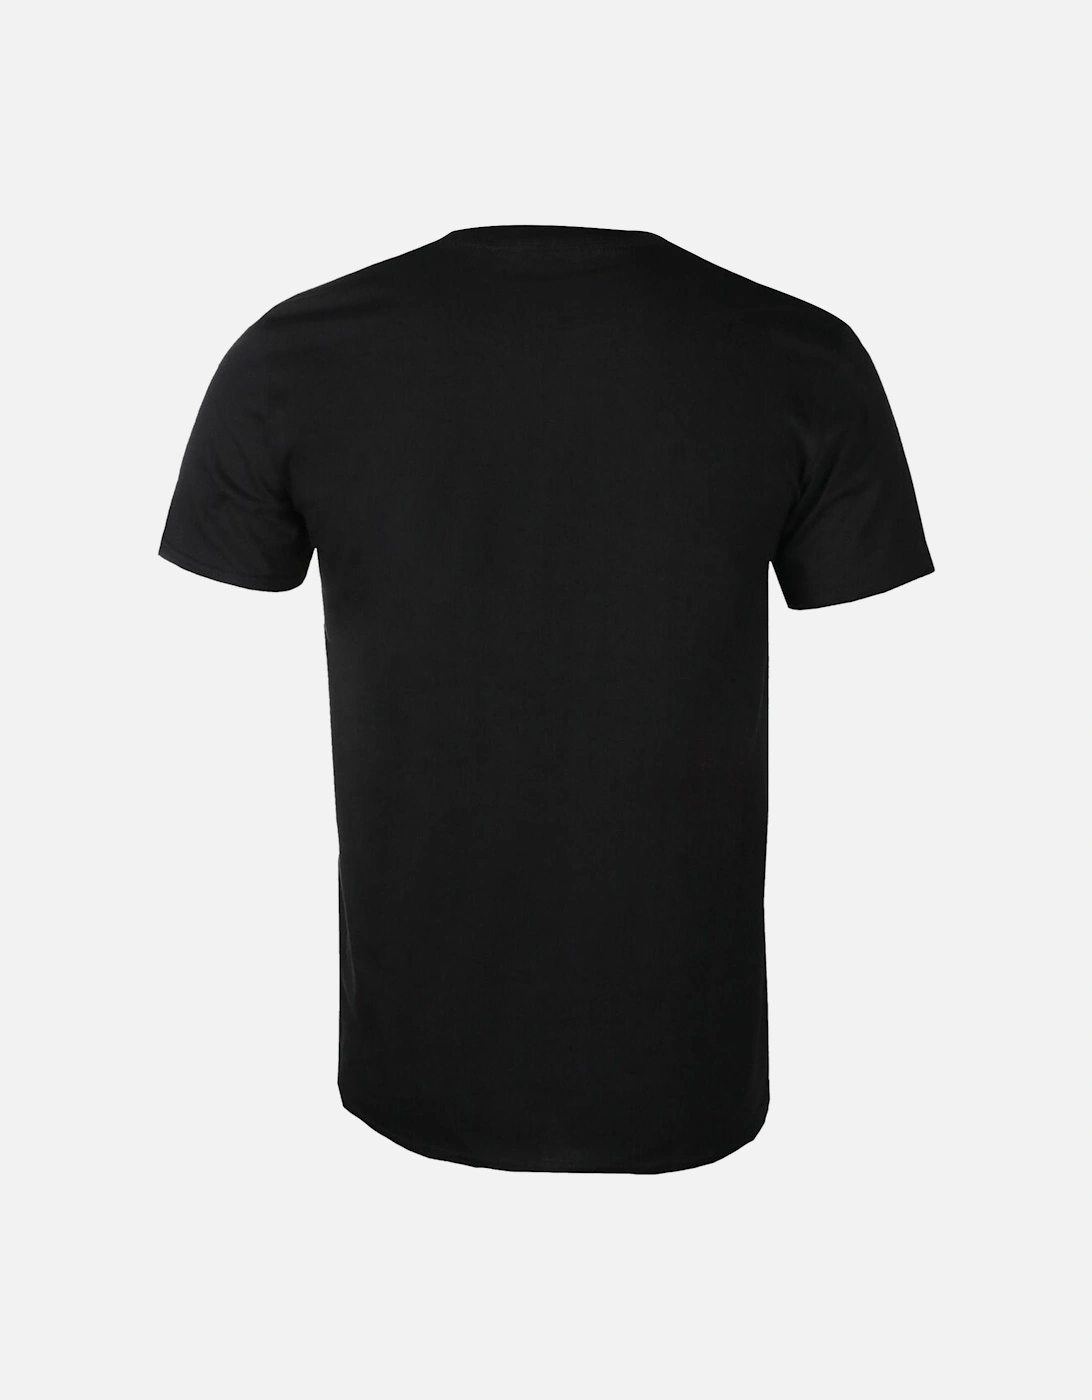 Unisex Adult Blended Pulse T-Shirt